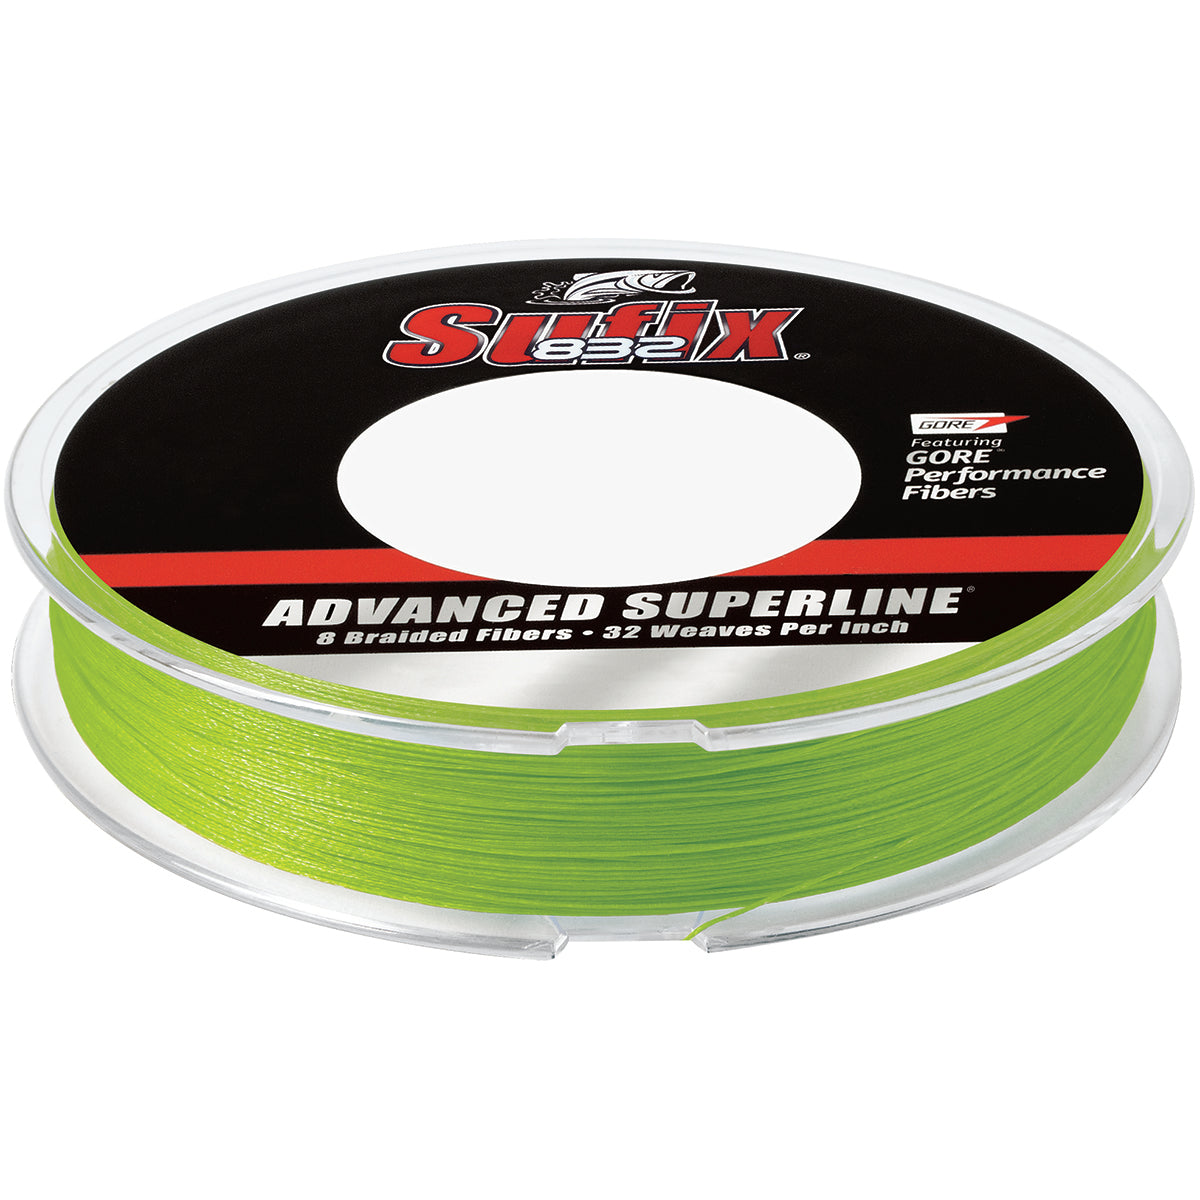 Sufix 150 Yard 832 Advanced Superline Braid Fishing Line - Neon Lime Sufix